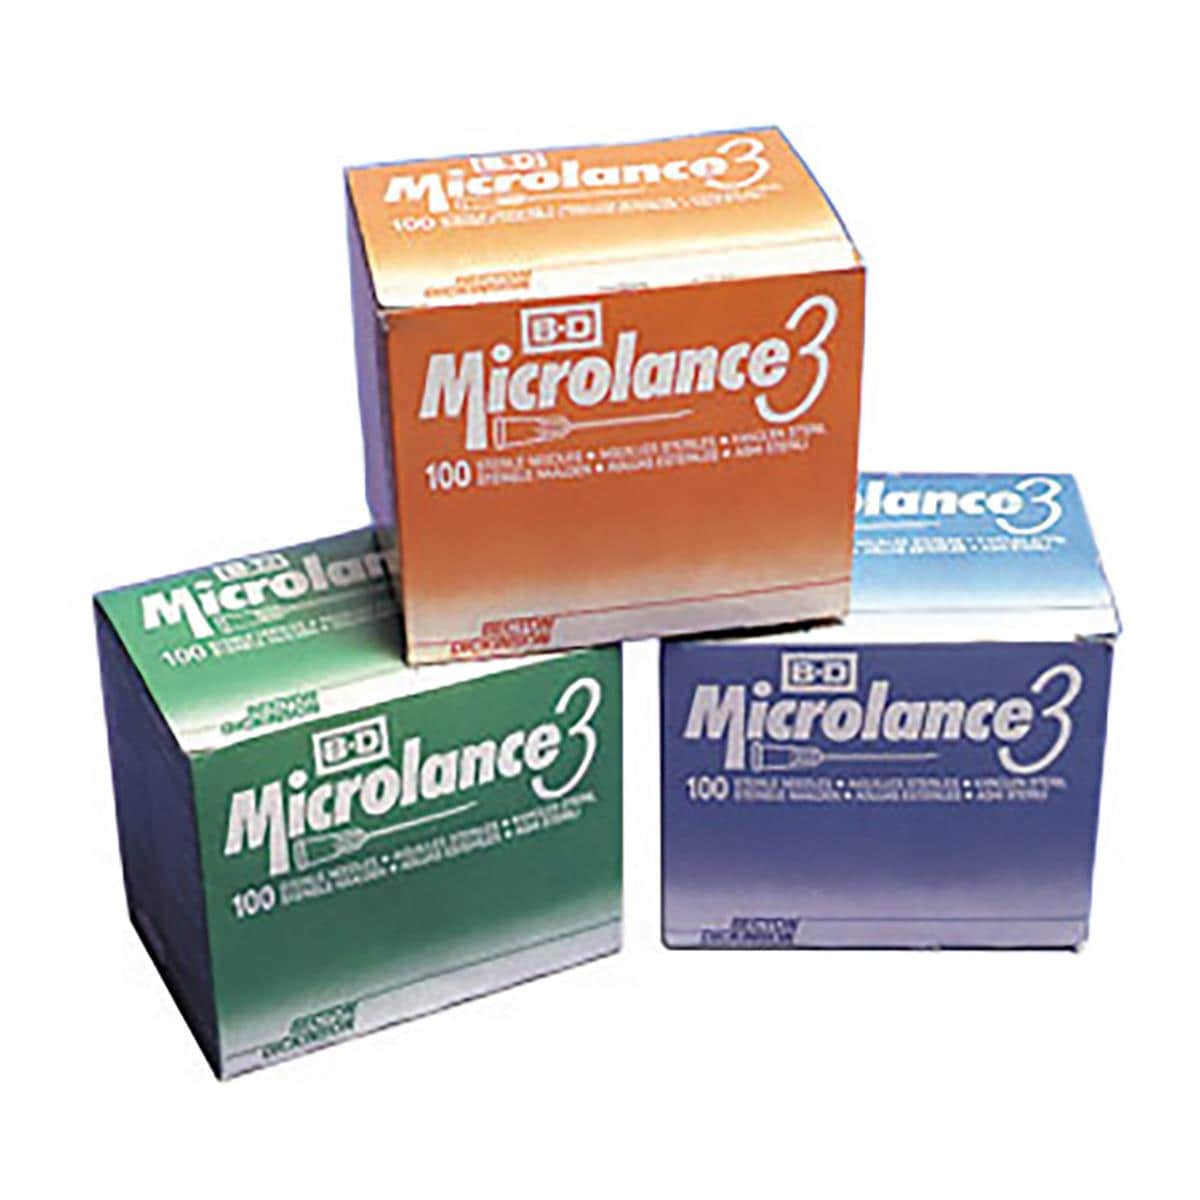 BD Microlance 3 Needle Sterile 21G 1.1/2" 100pk